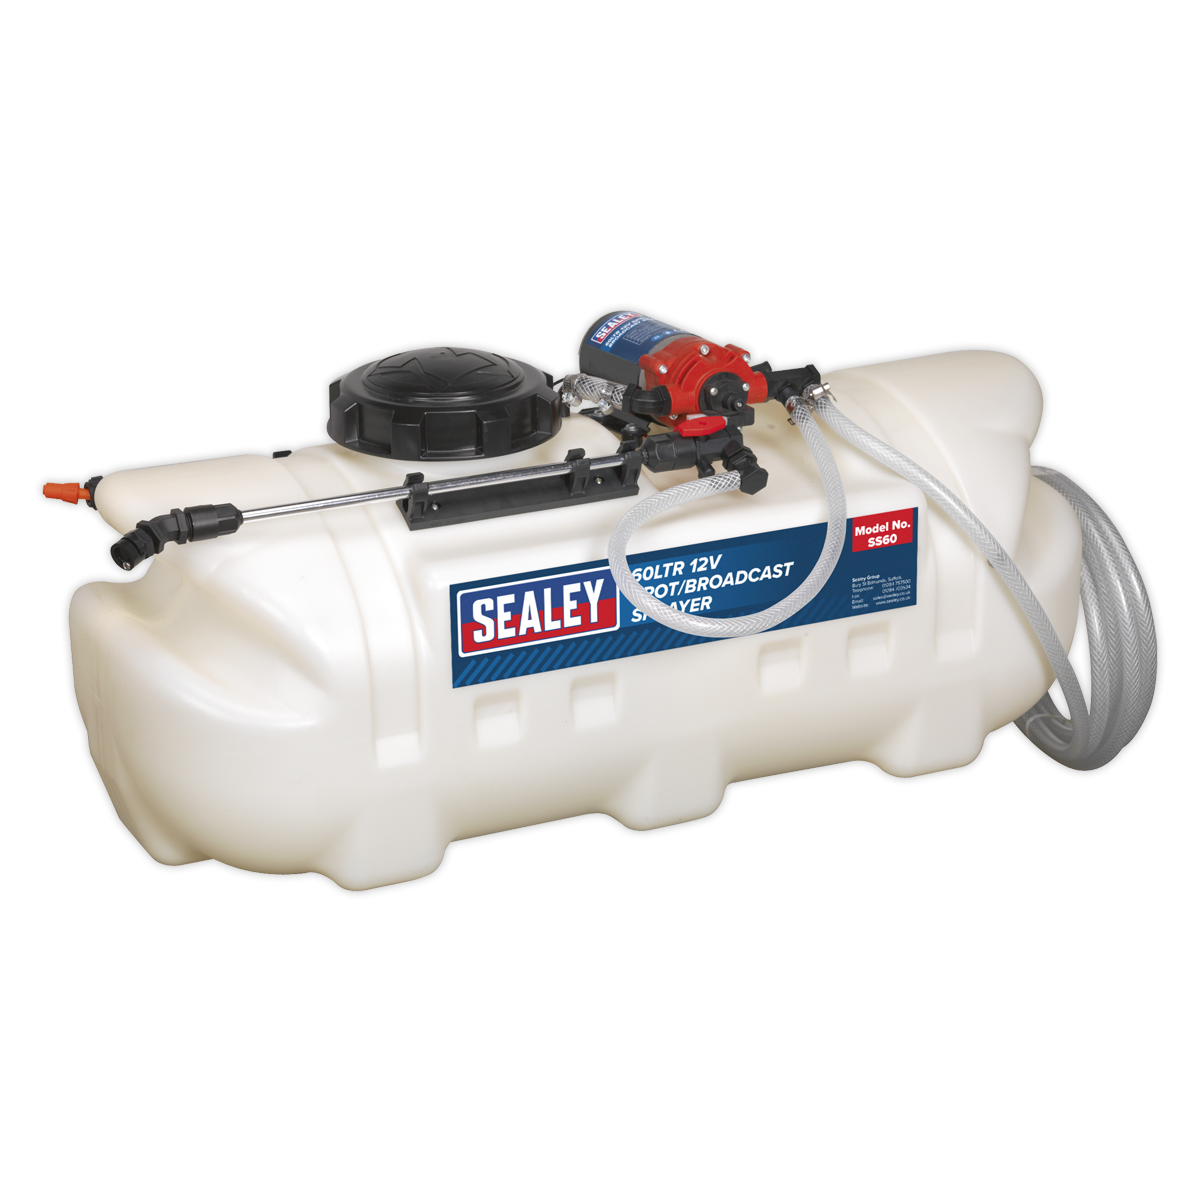 Sealey fertiliser and Weedkiller sprayer SS60